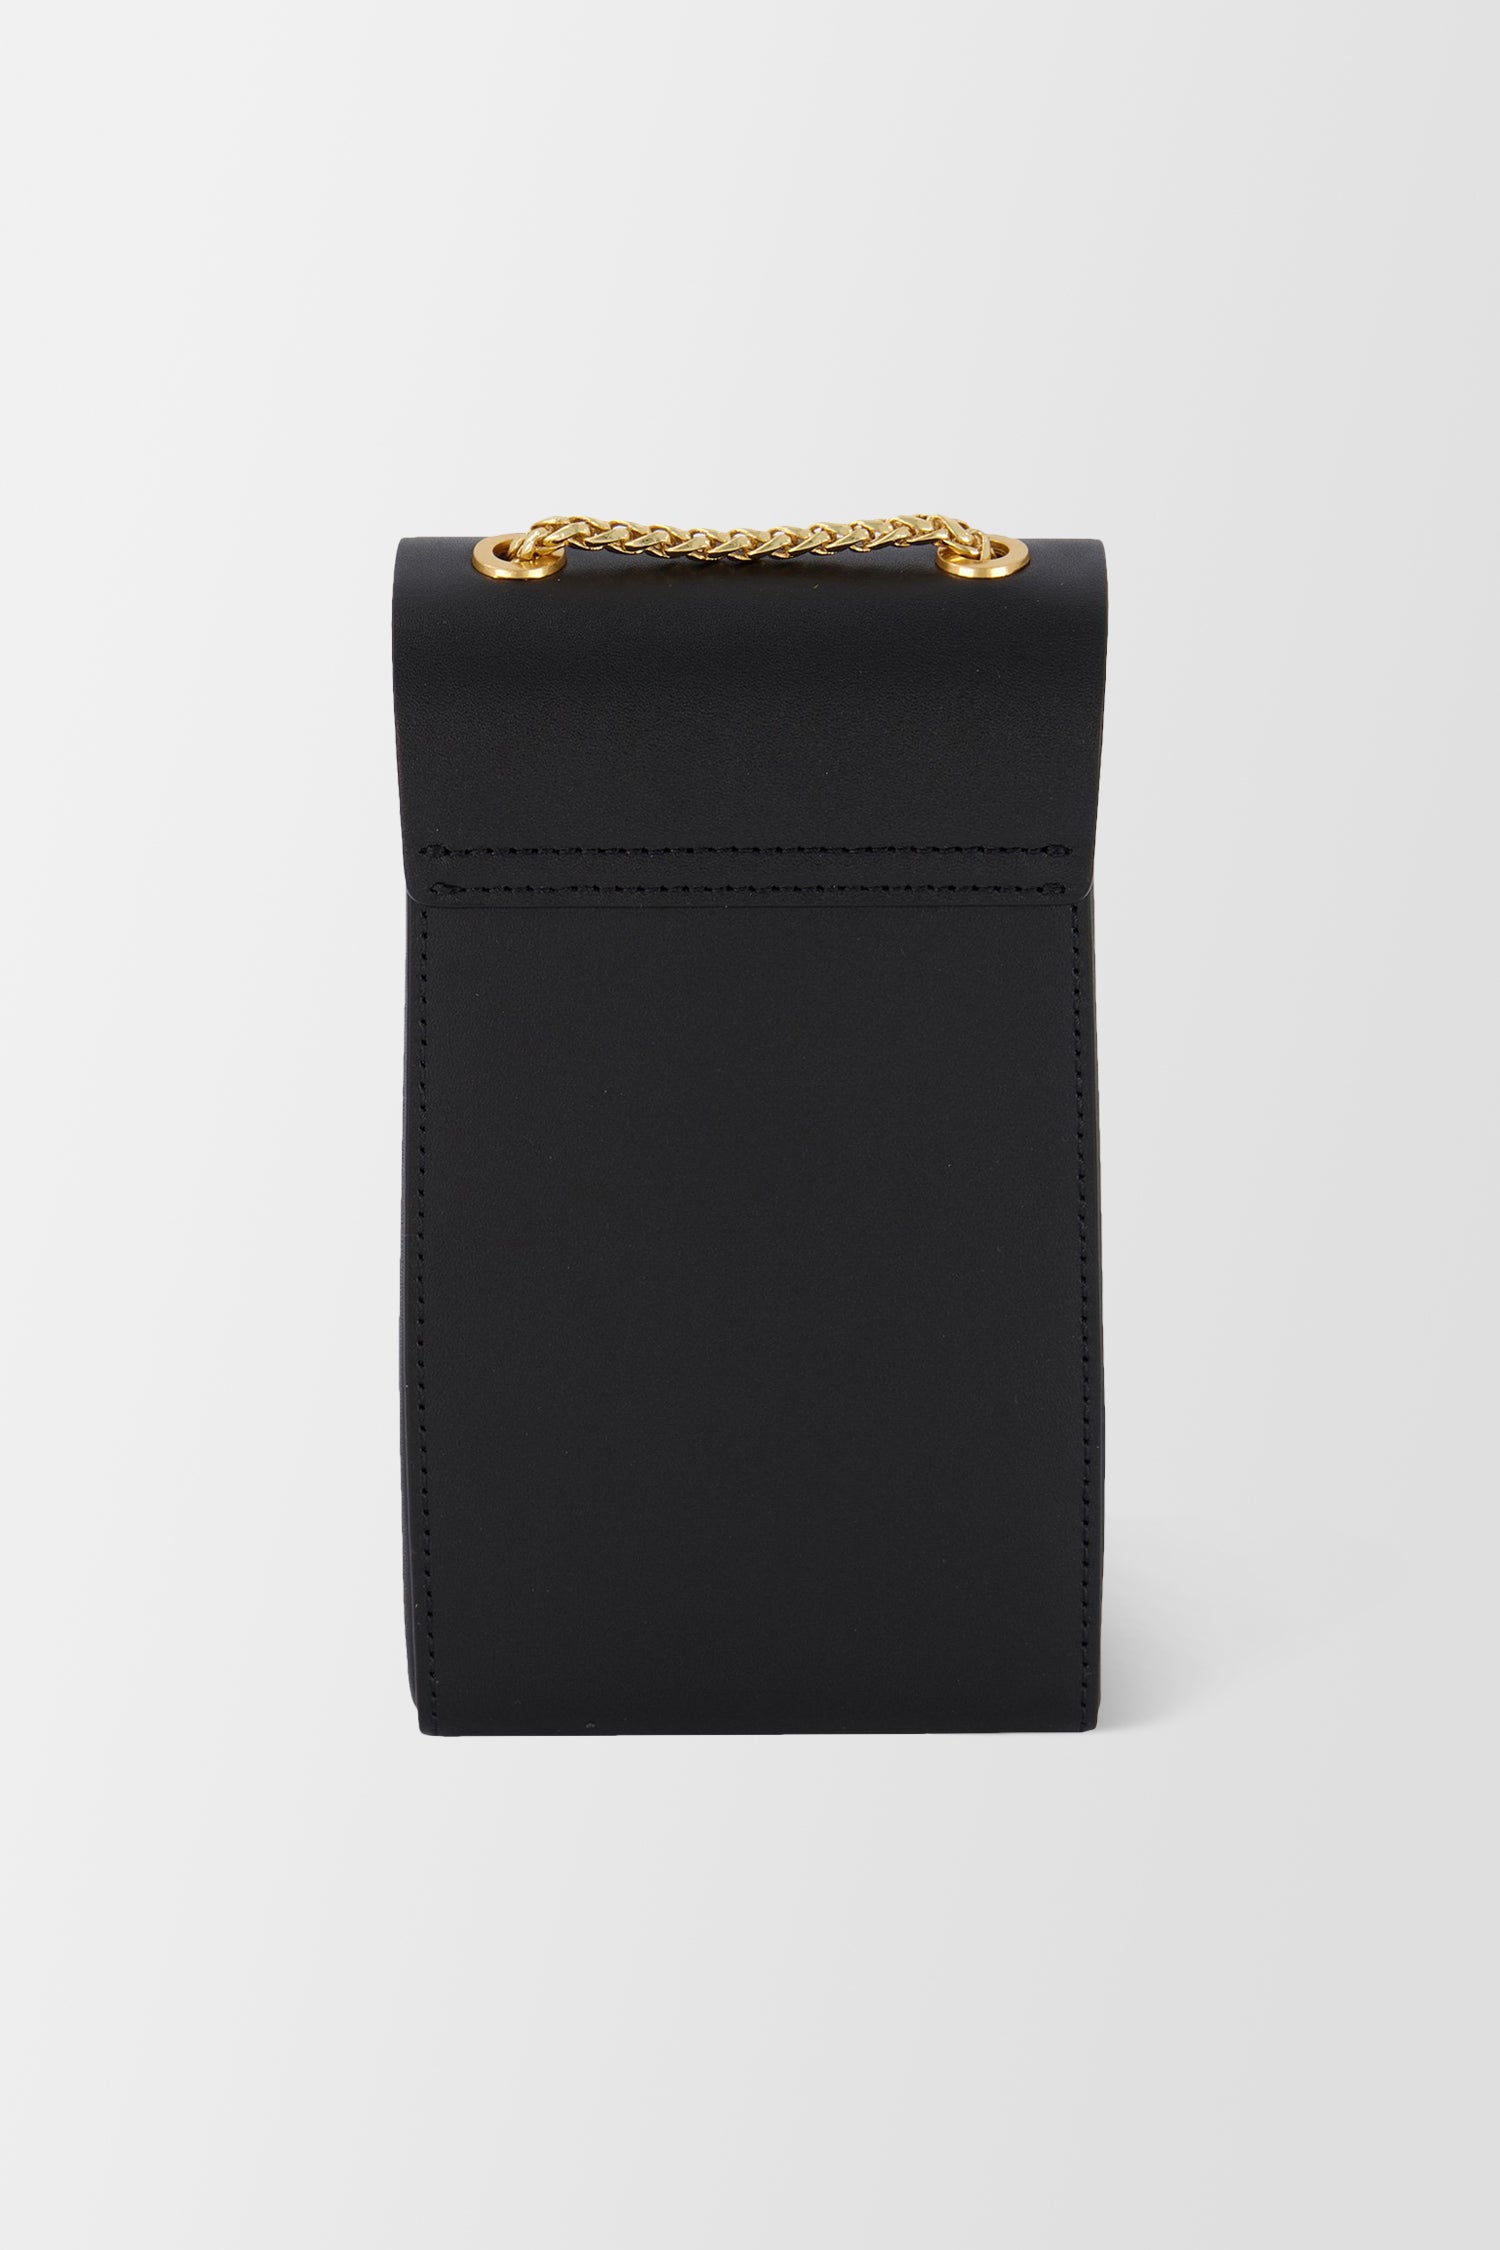 The Volon Black Phone Case Bag